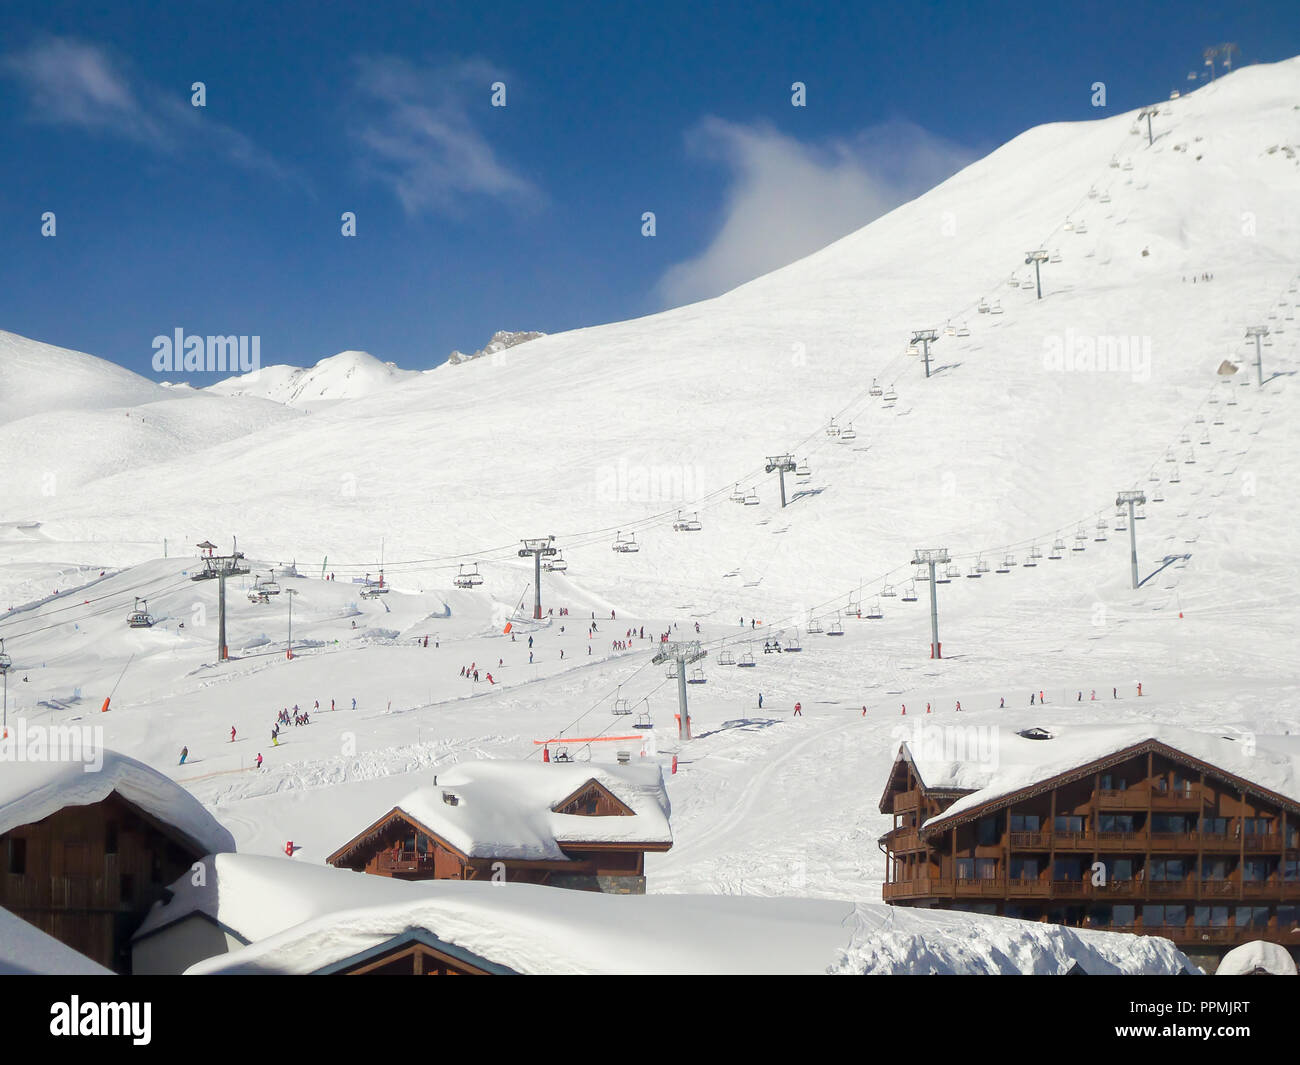 Ski resort of Tignes in winter, ski lifts and village of Tignes le lac in the foreground Stock Photo